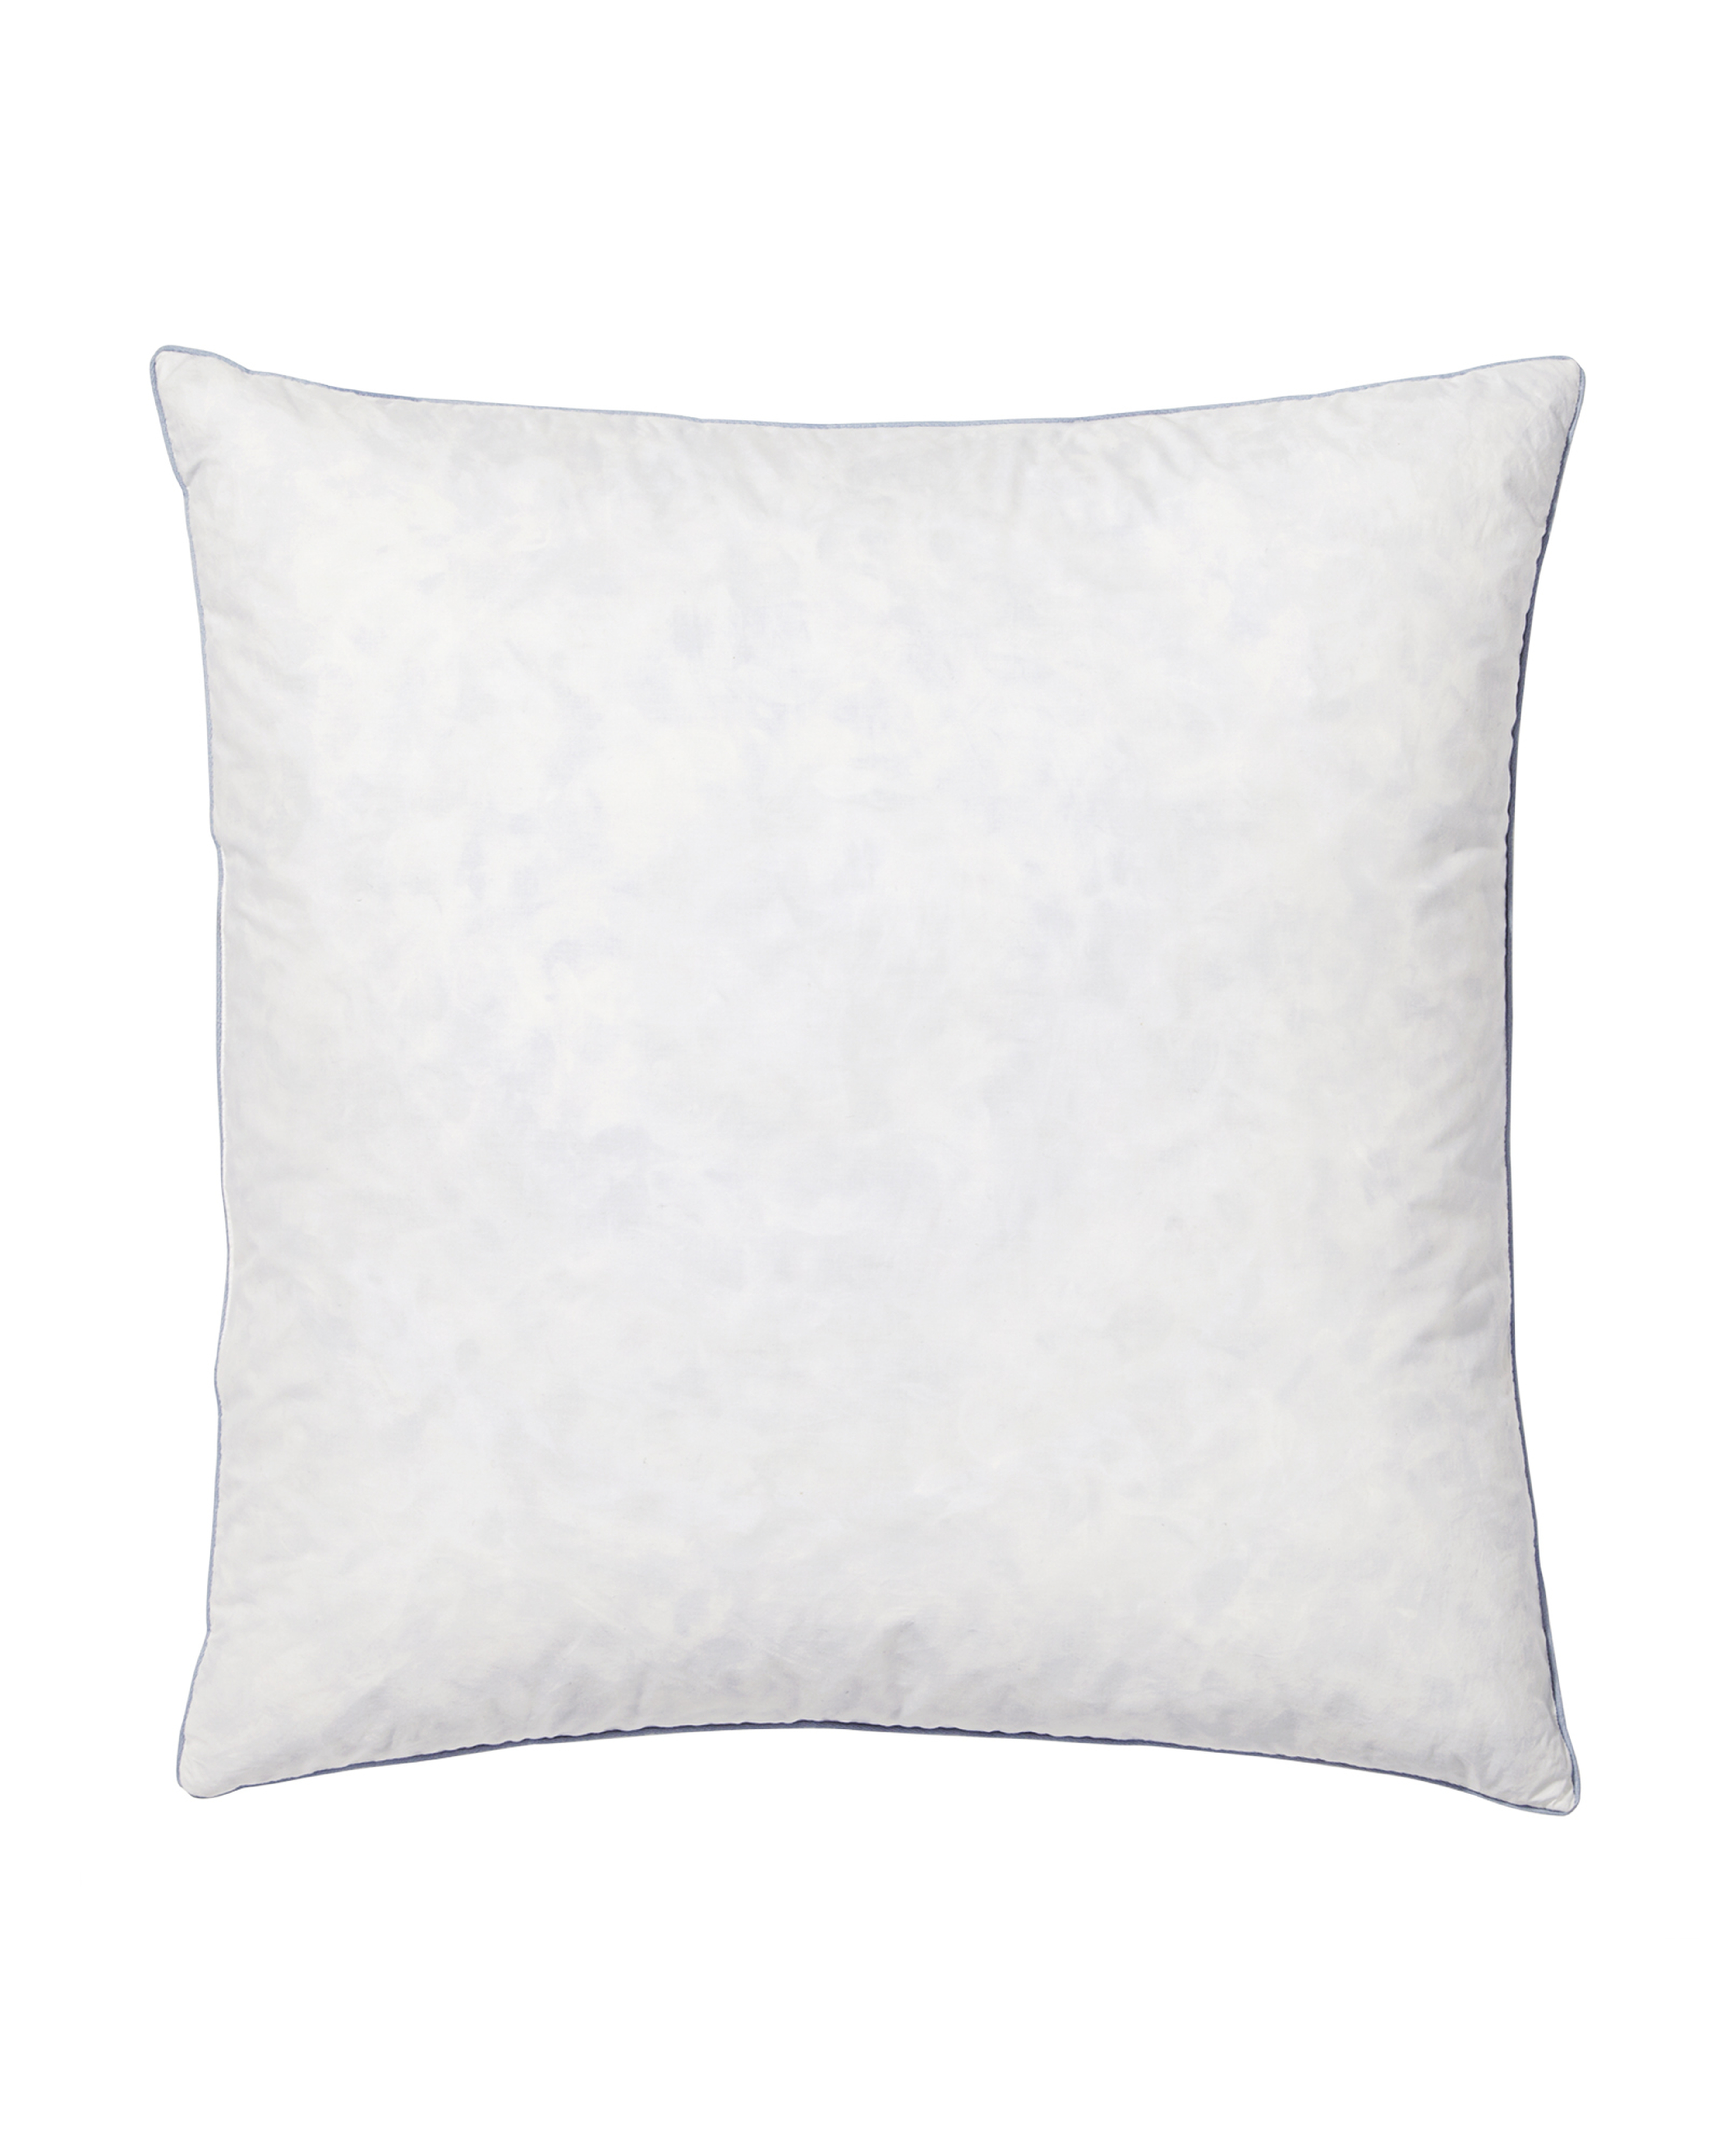 Euro Pillow Insert, Premium, Down Alternative - 26"x26" - Serena and Lily